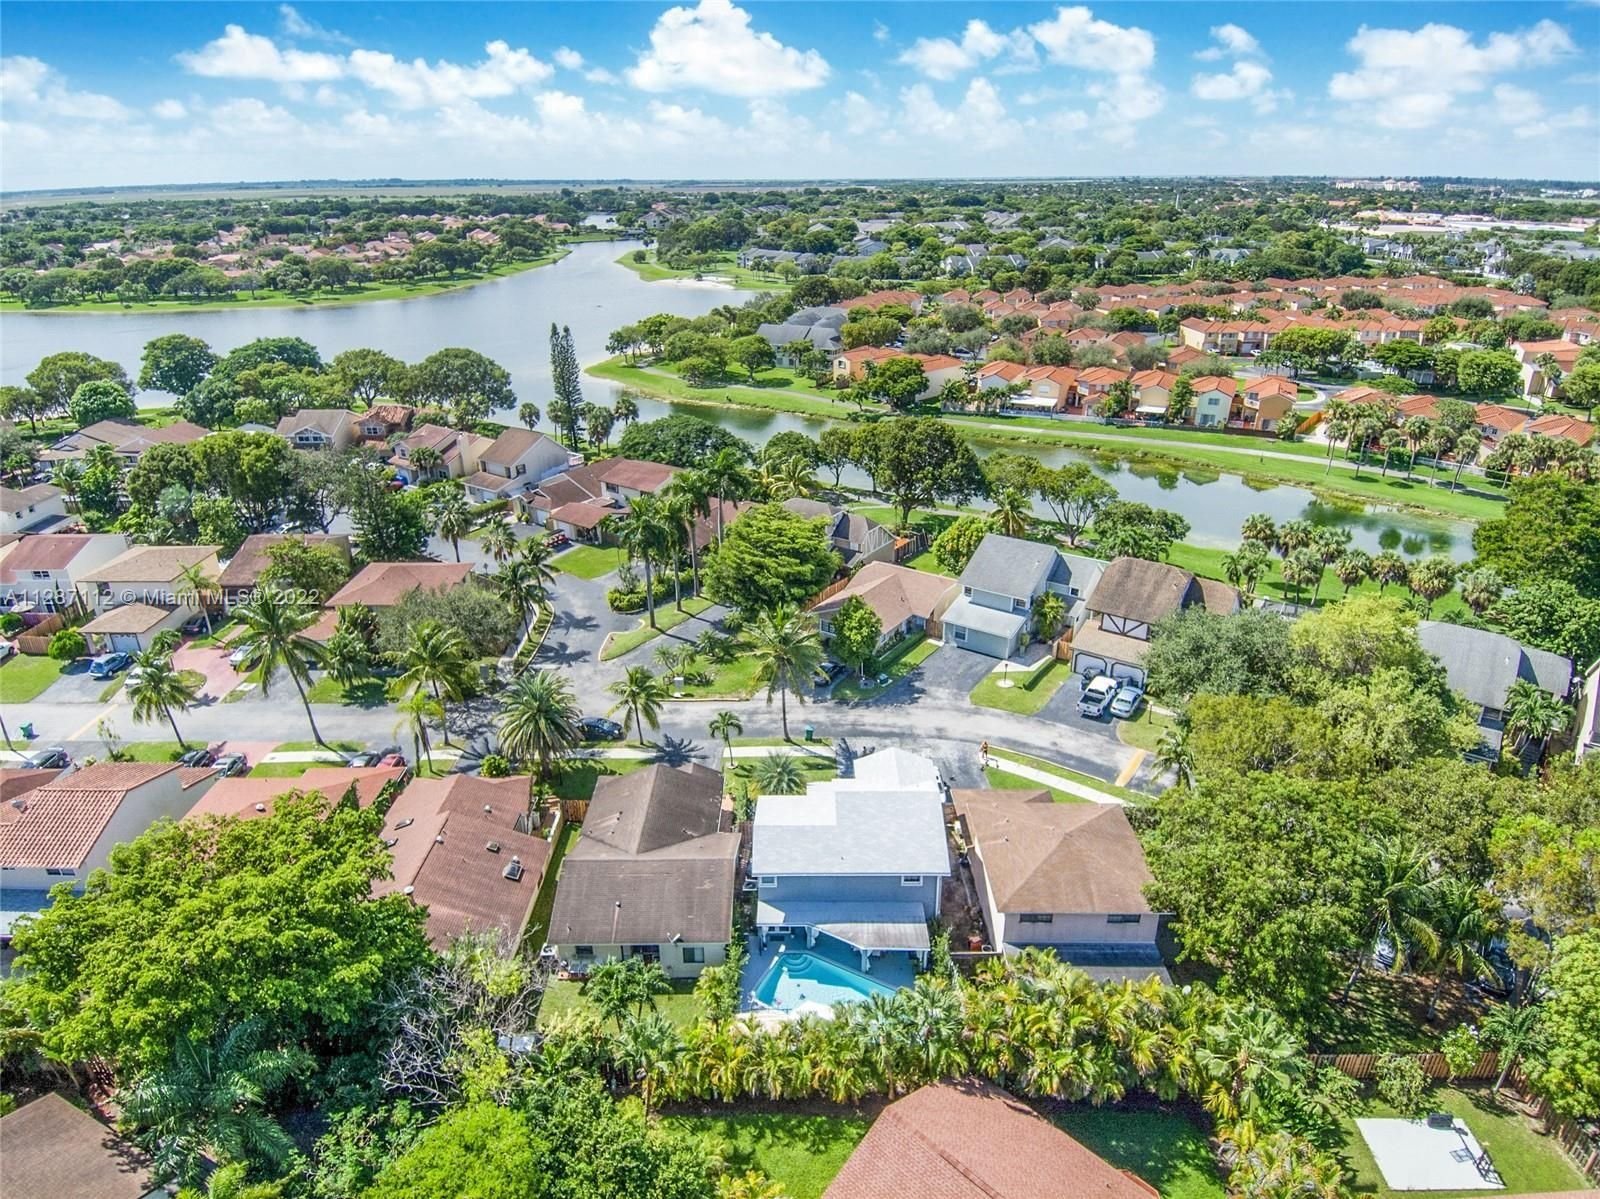 Real estate property located at 10627 148th Ct, Miami-Dade County, Miami, FL